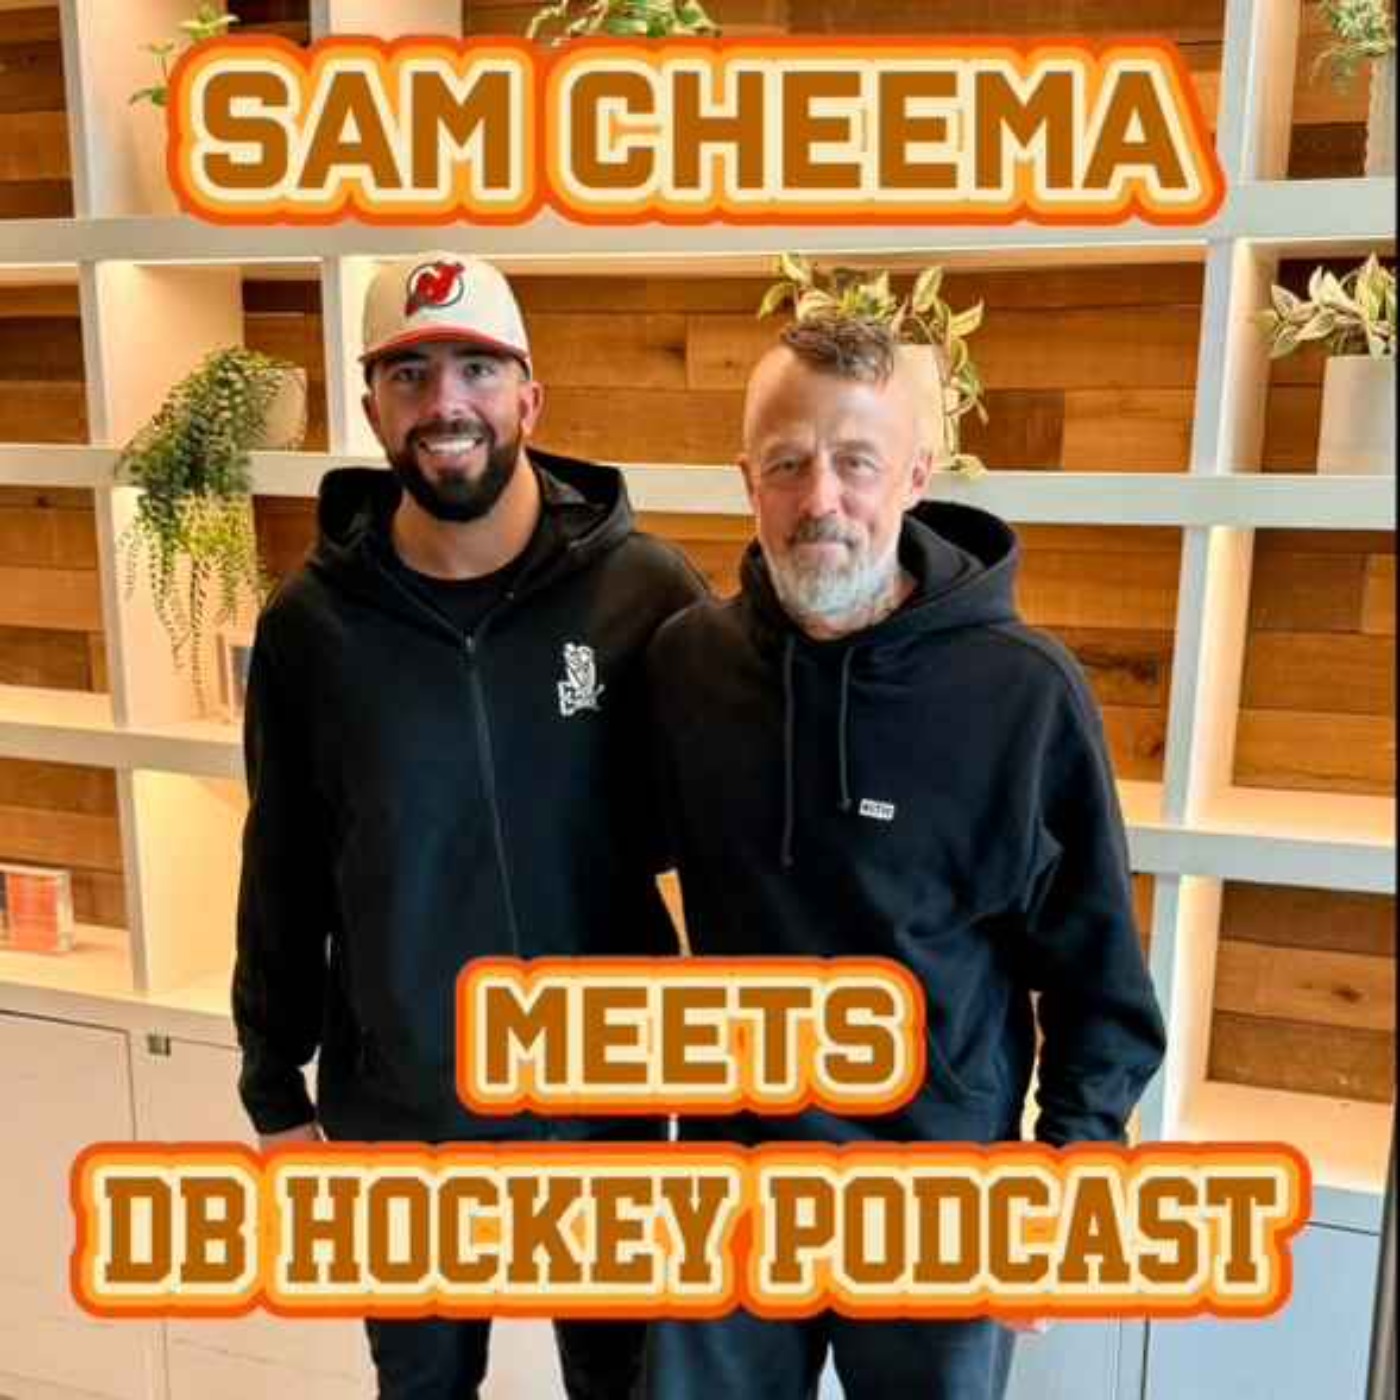 cover art for DB Hockey Podcast möter Sam Cheema